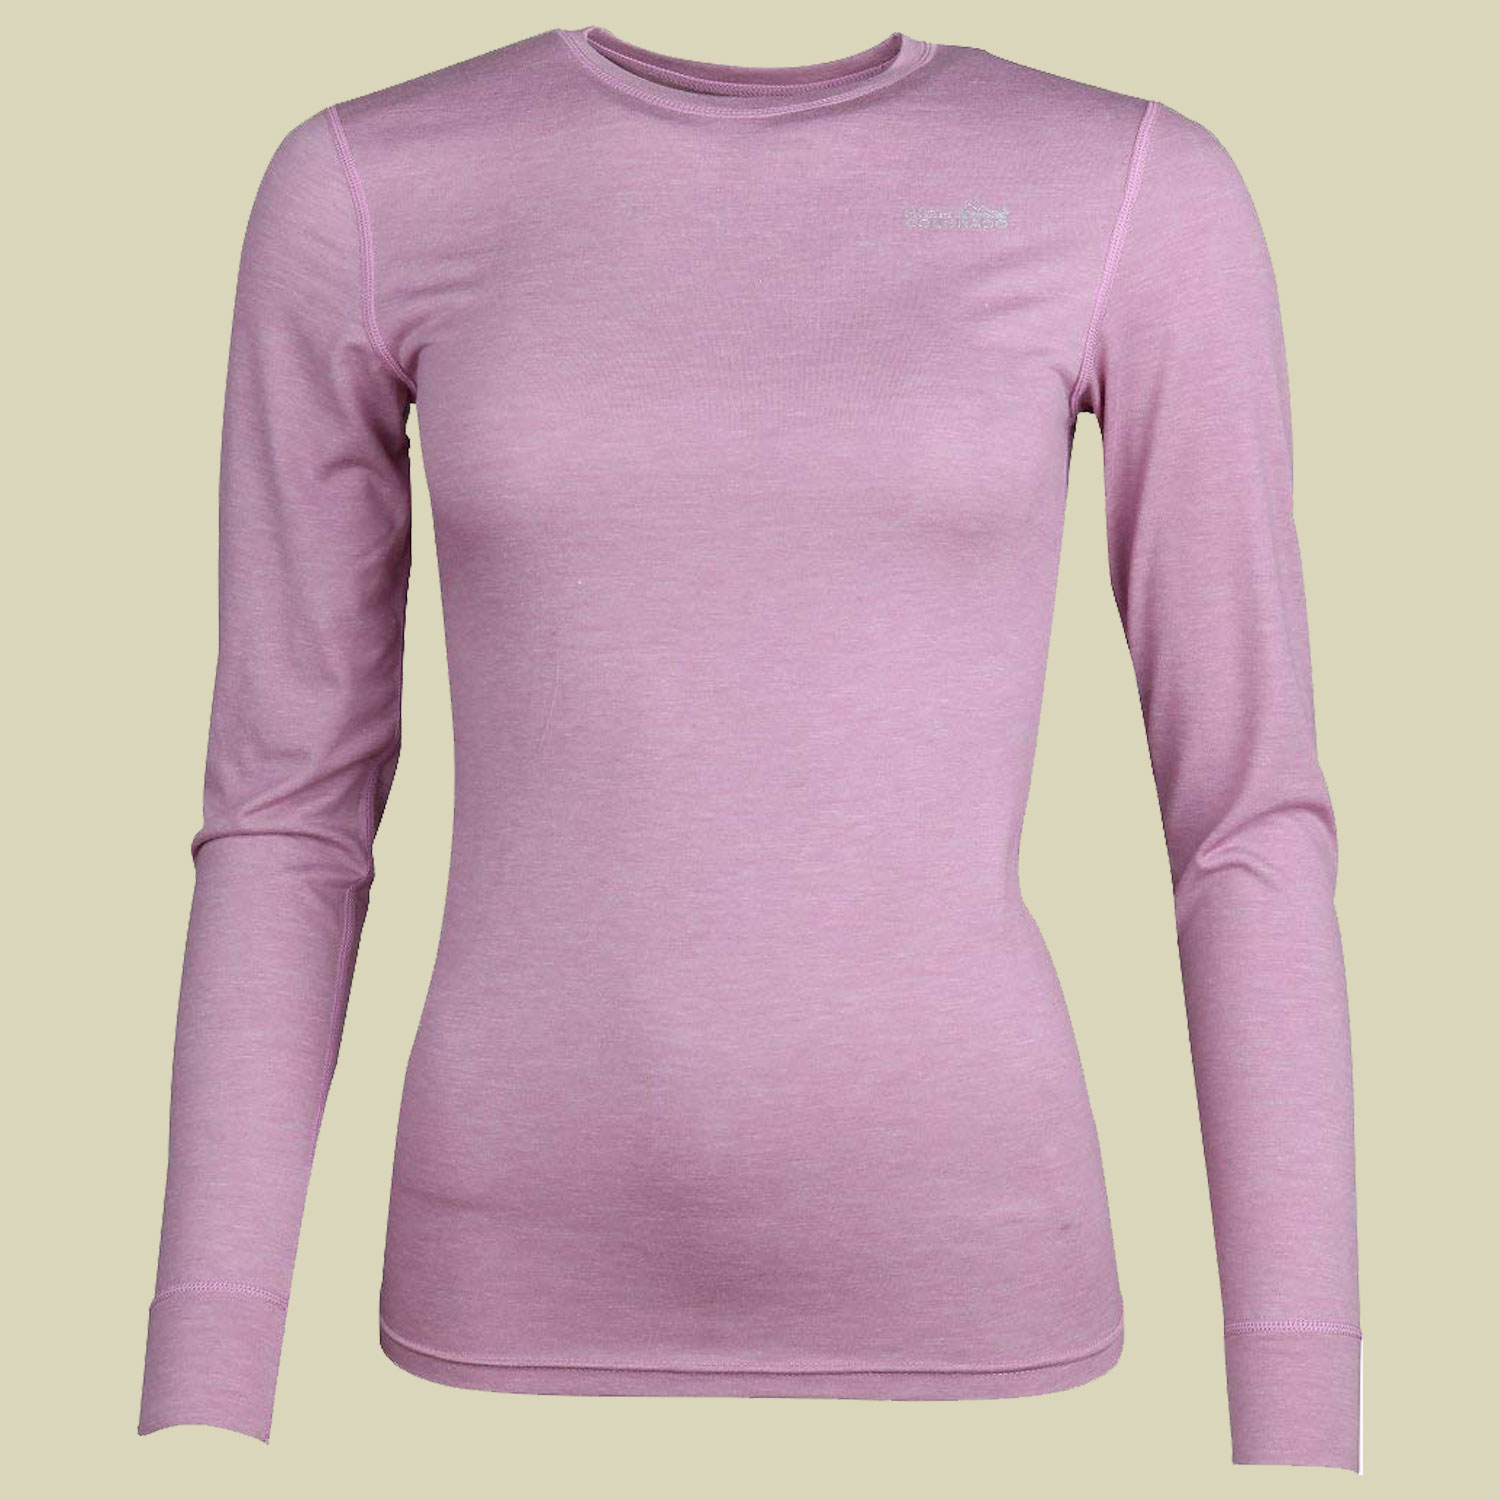 Bergen Langarm-Shirt Women Größe 42 Farbe 4303 rose melange